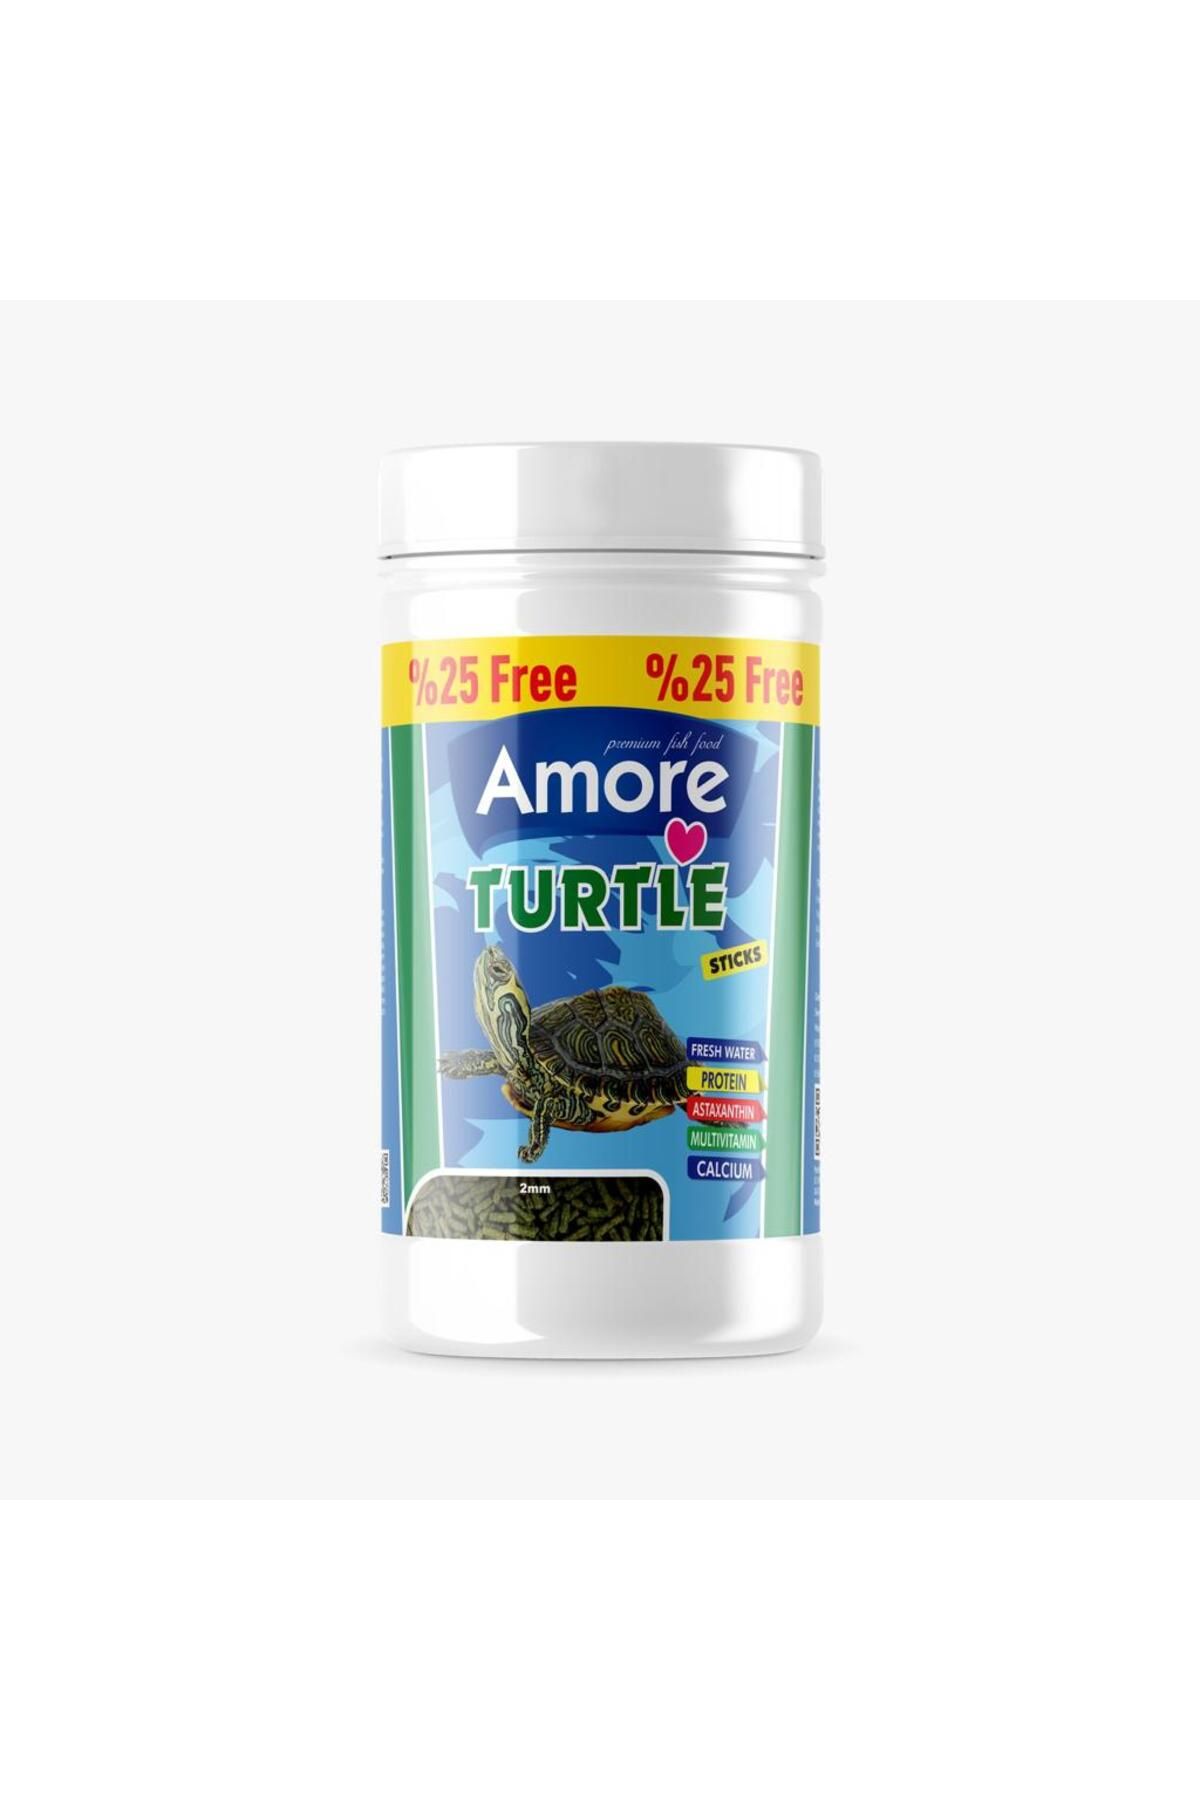 Amore Turtle Calcium Sticks 6x125 ml Vitaminli Su Kaplumbagasi Yuzen Yemi, Kaya Tuzu Tabletleri